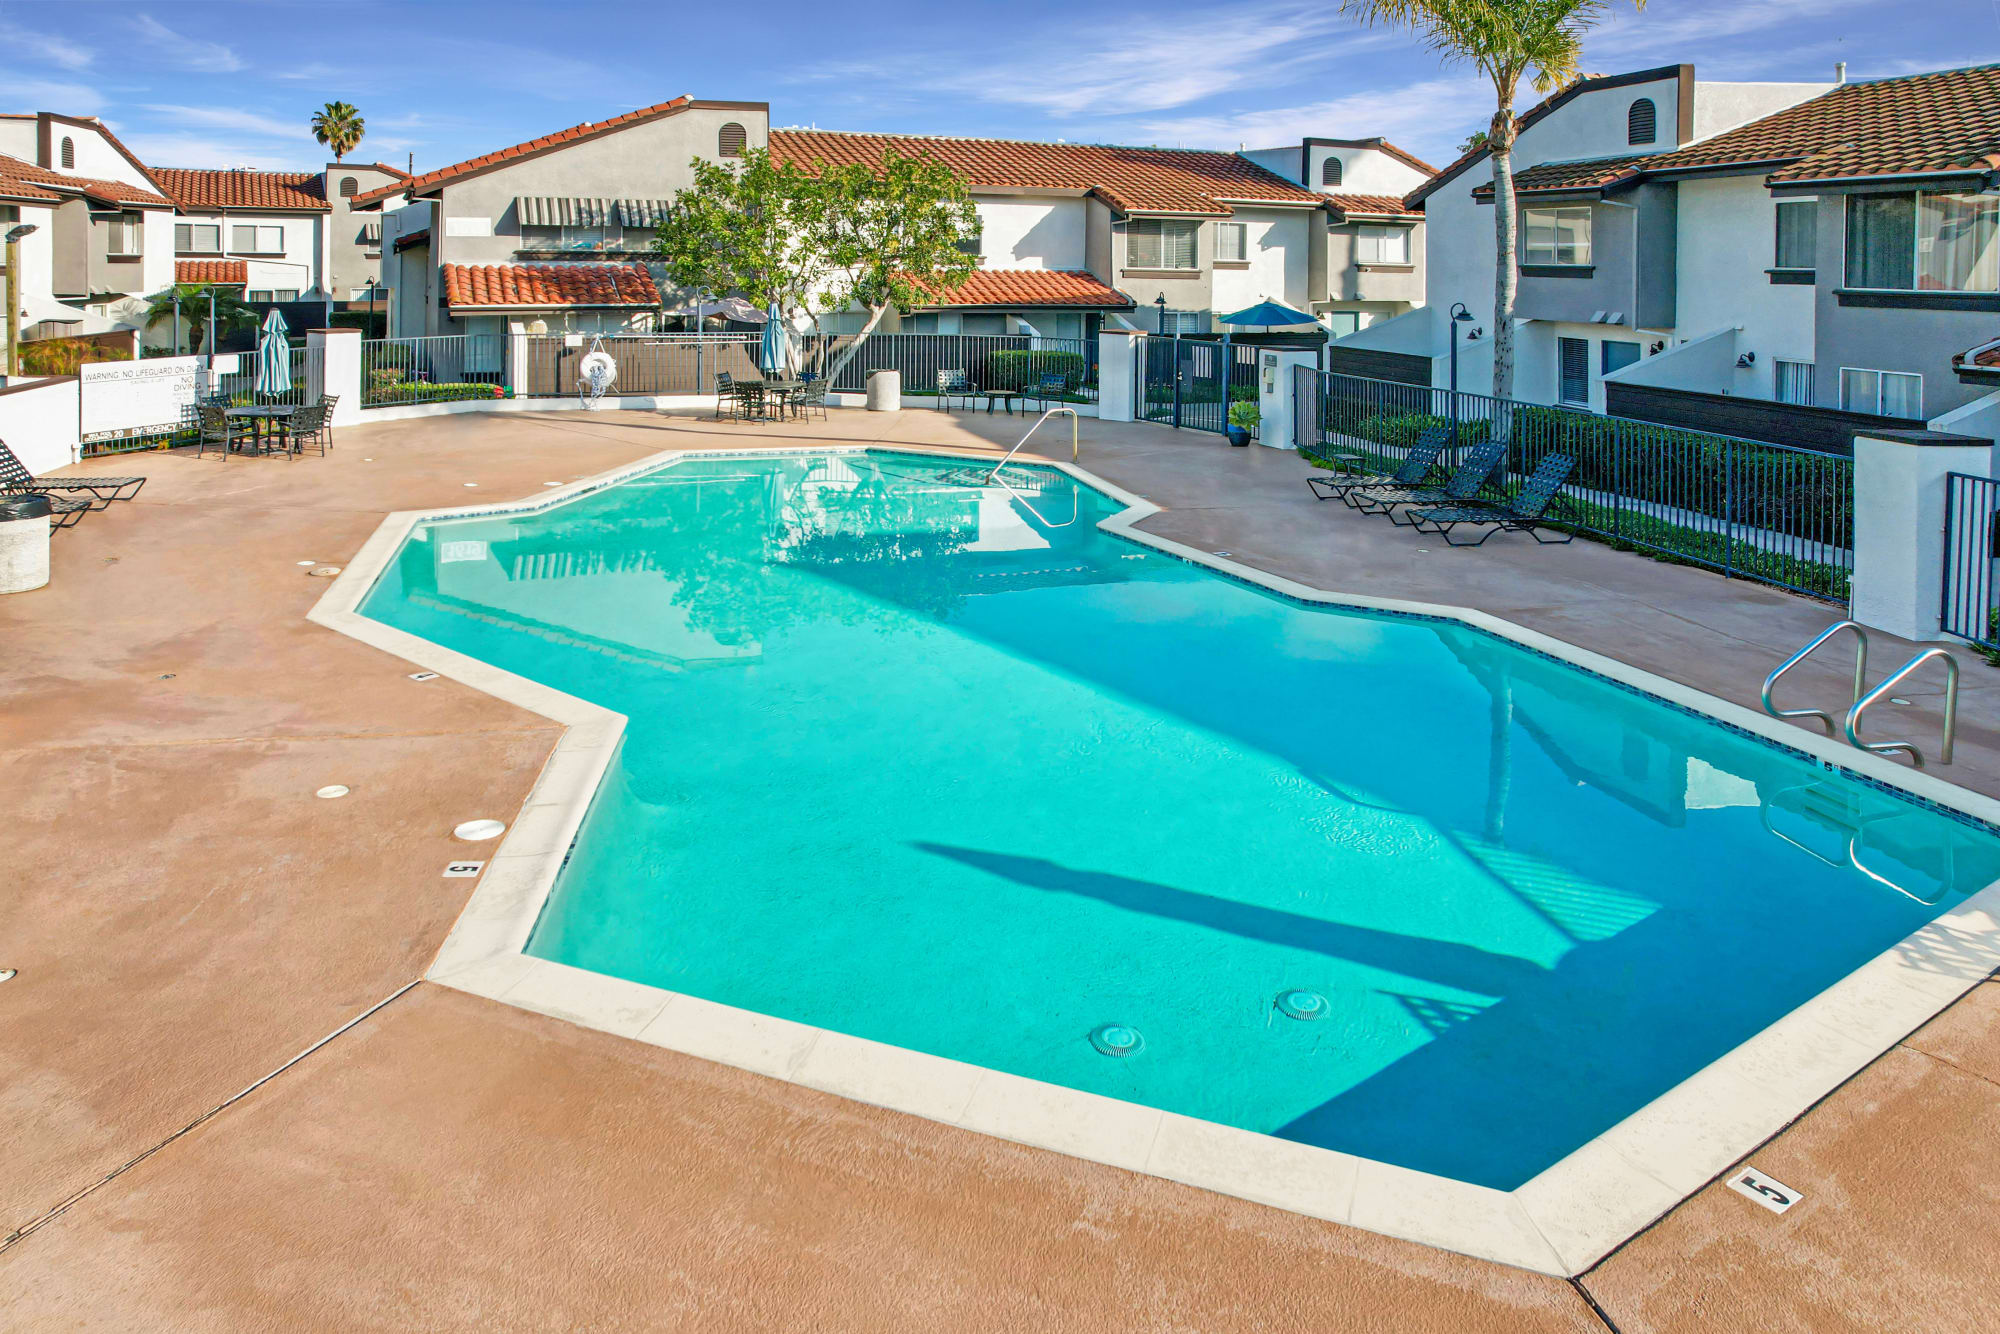 The sparkling swimming pool at Portofino Townhomes in Wilmington, California